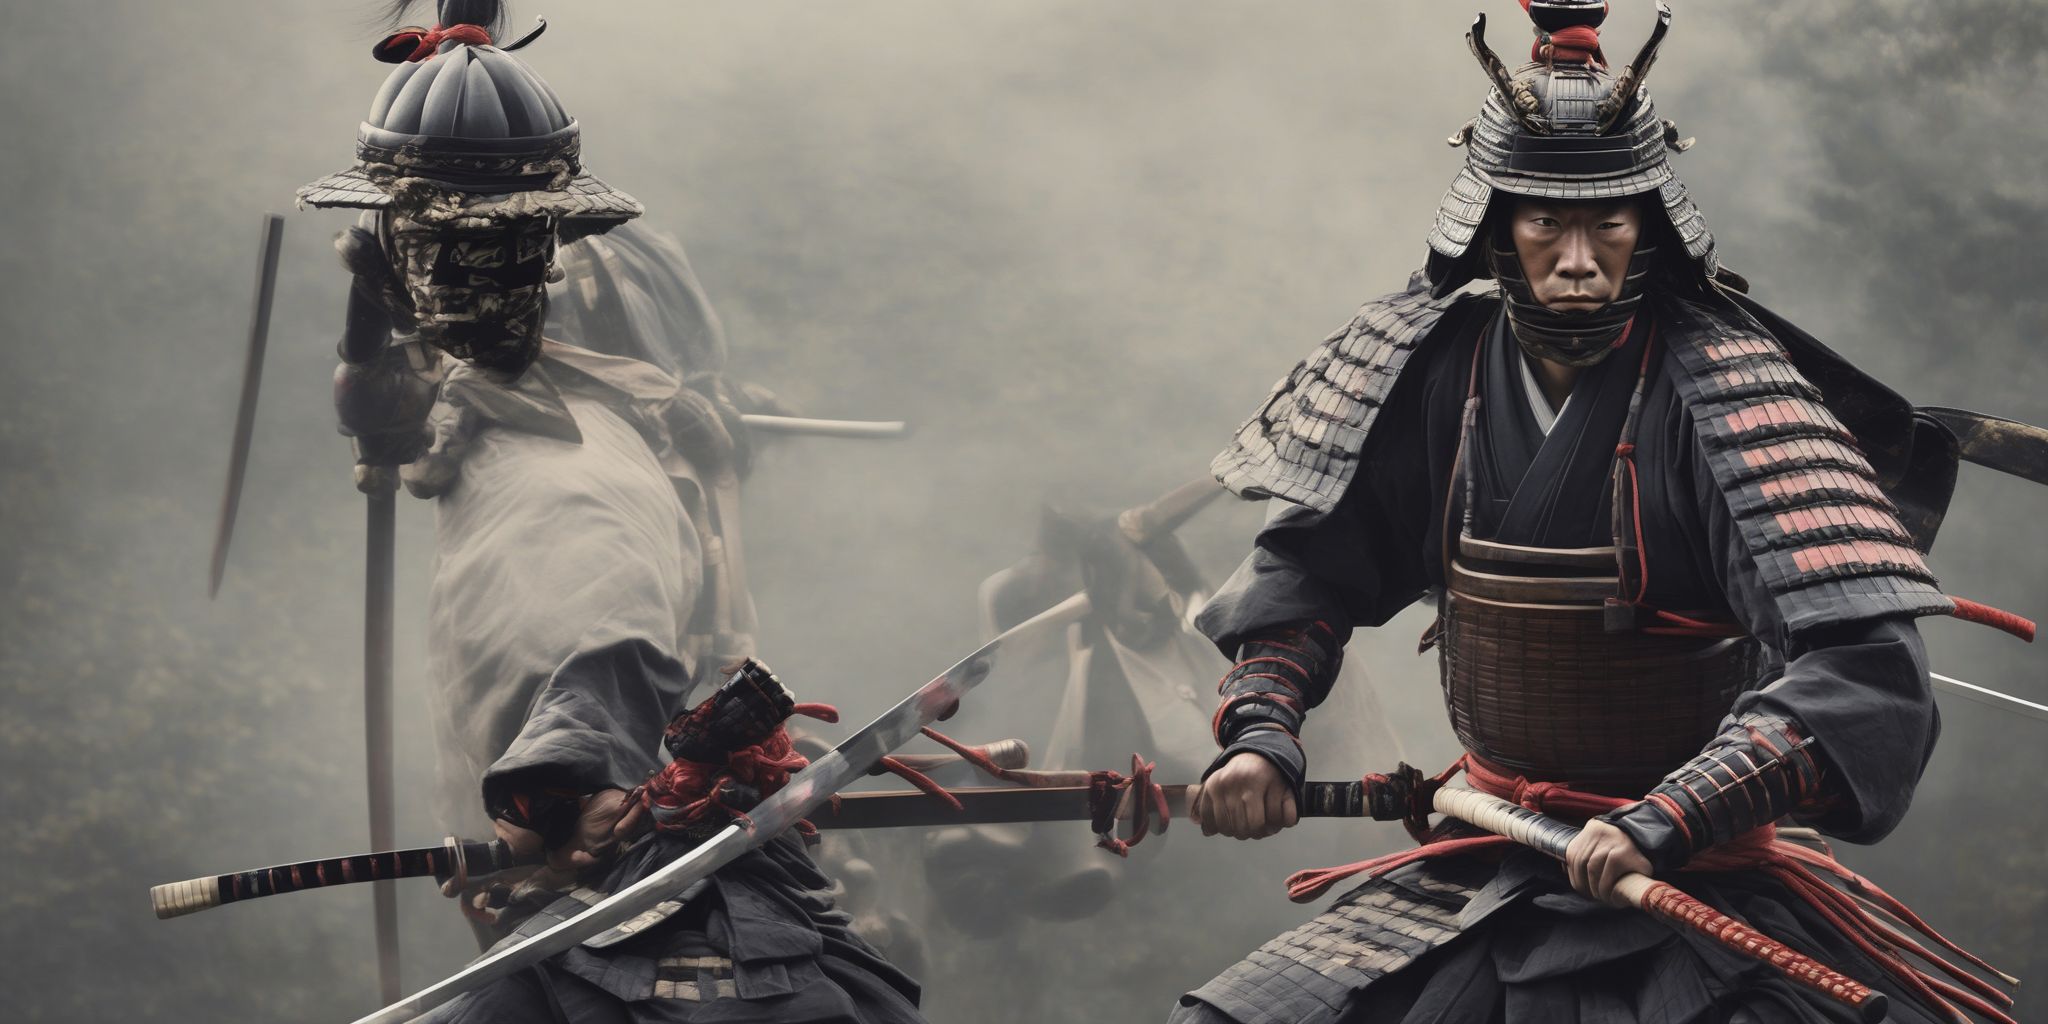 Samurai  in realistic, photographic style